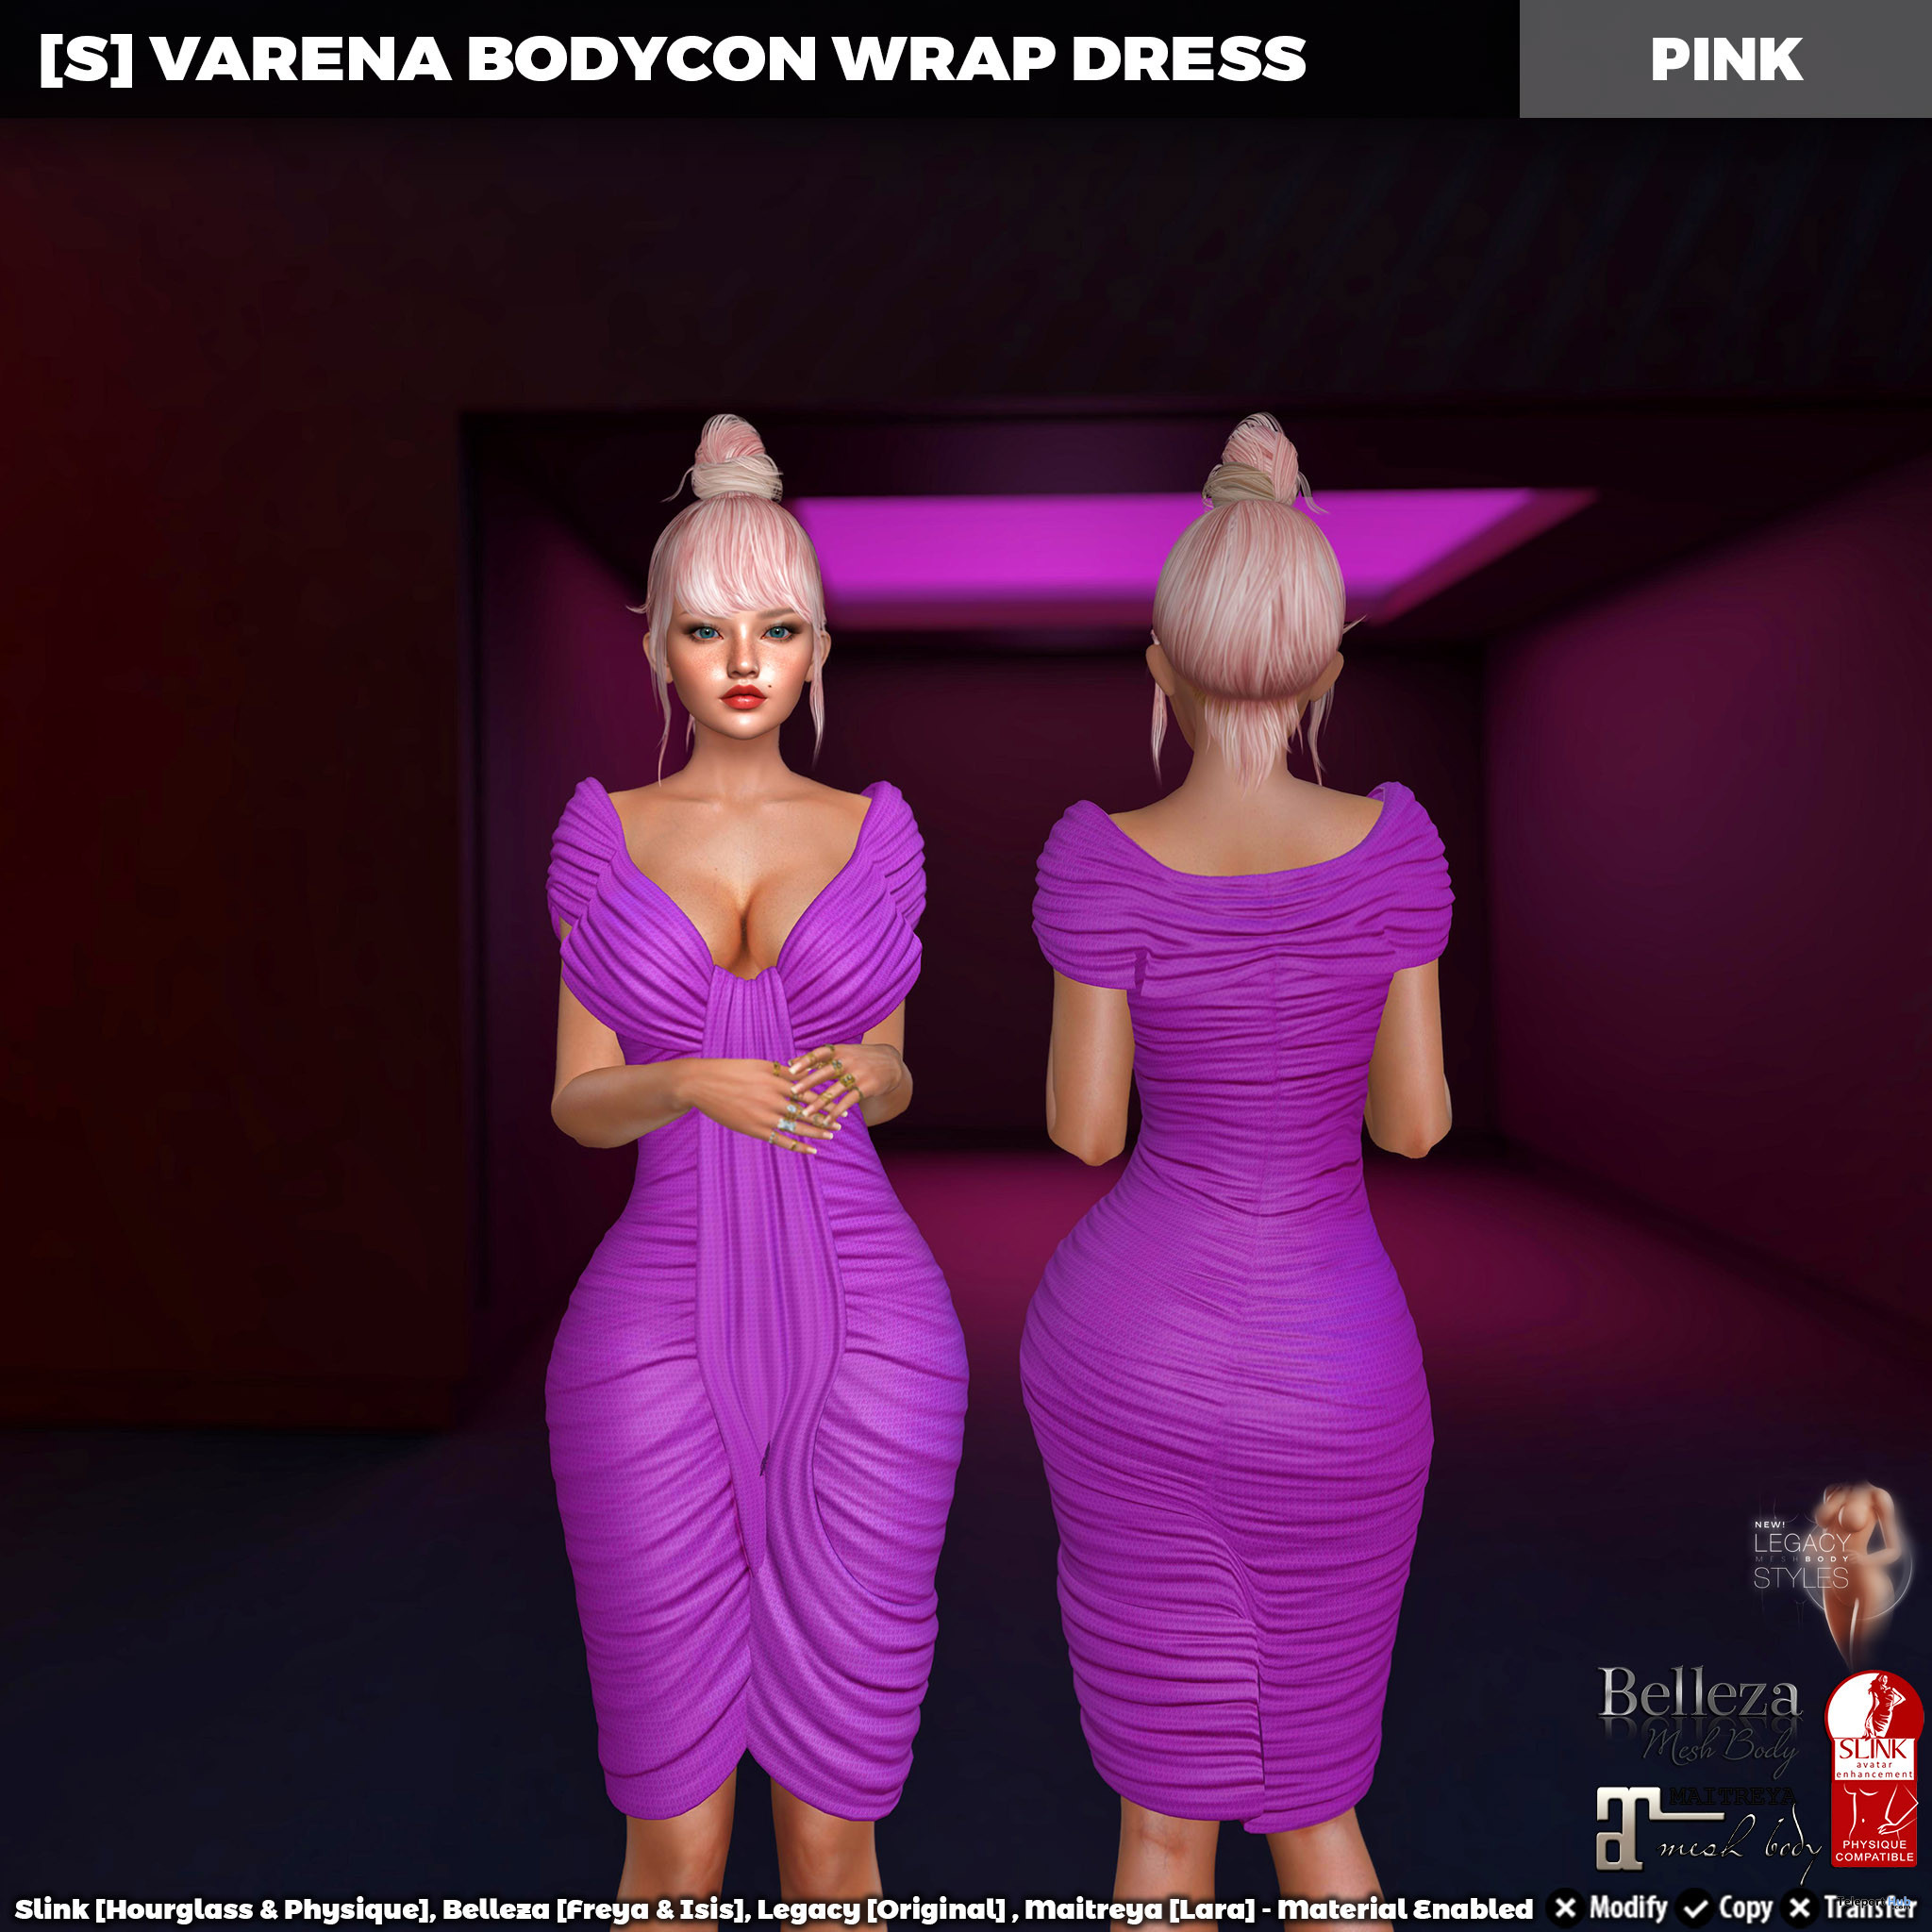 New Release: [S] Varena Bodycon Wrap Dress by [satus Inc] - Teleport Hub - teleporthub.com